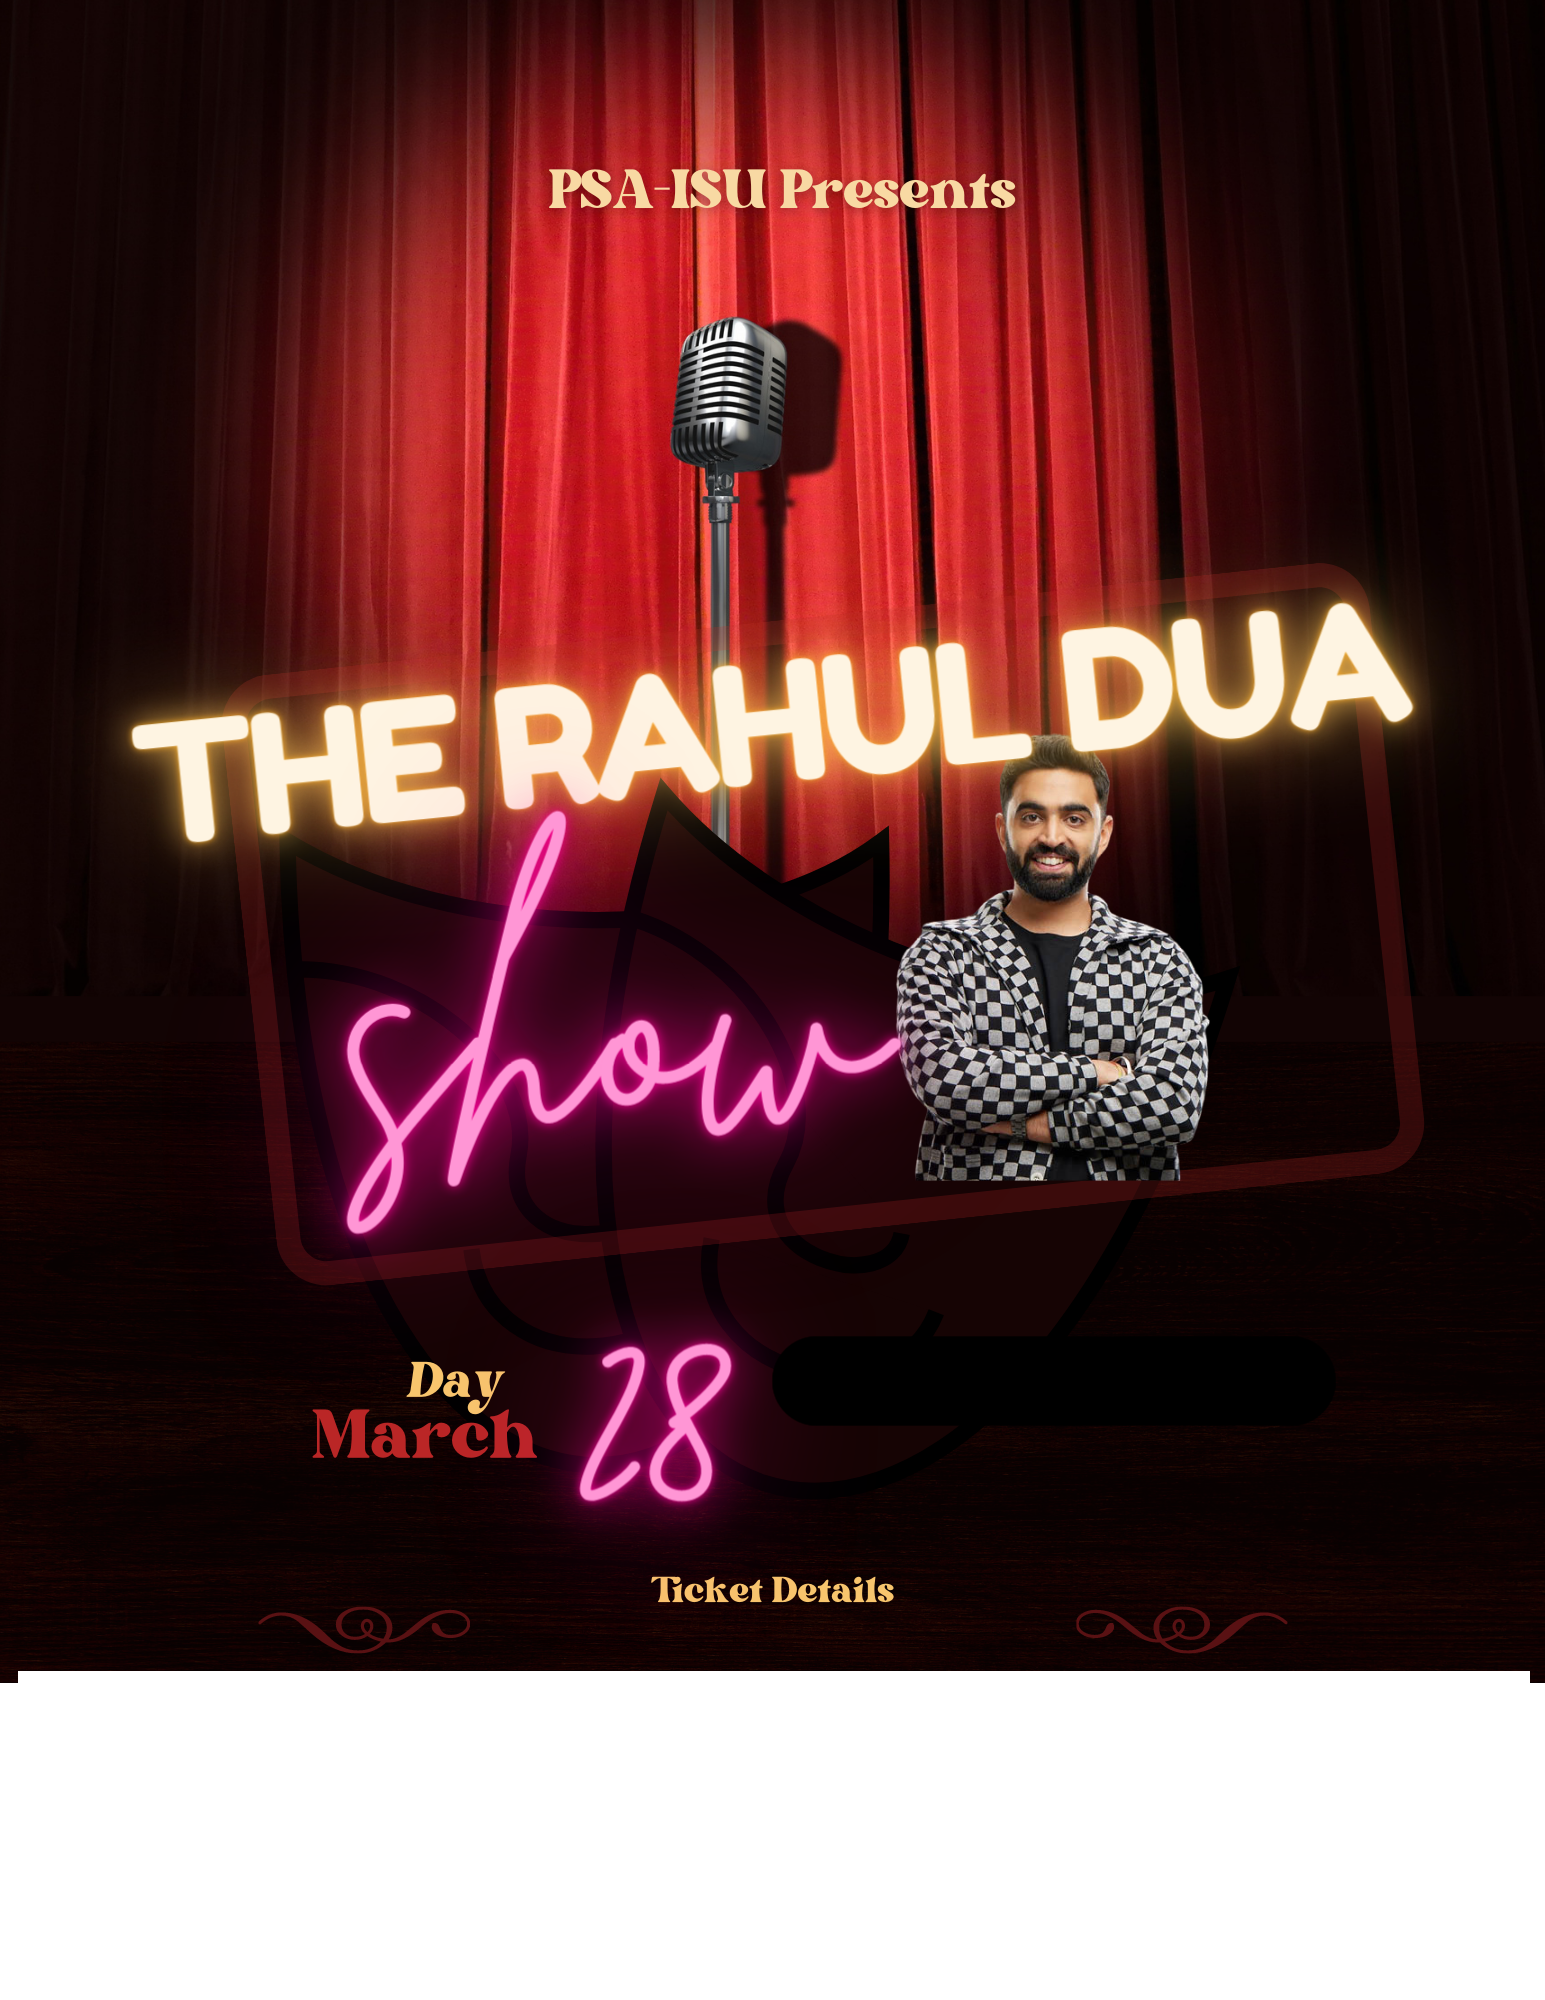 The PSA@ISU presents 'The RAHUL DUA Show' 